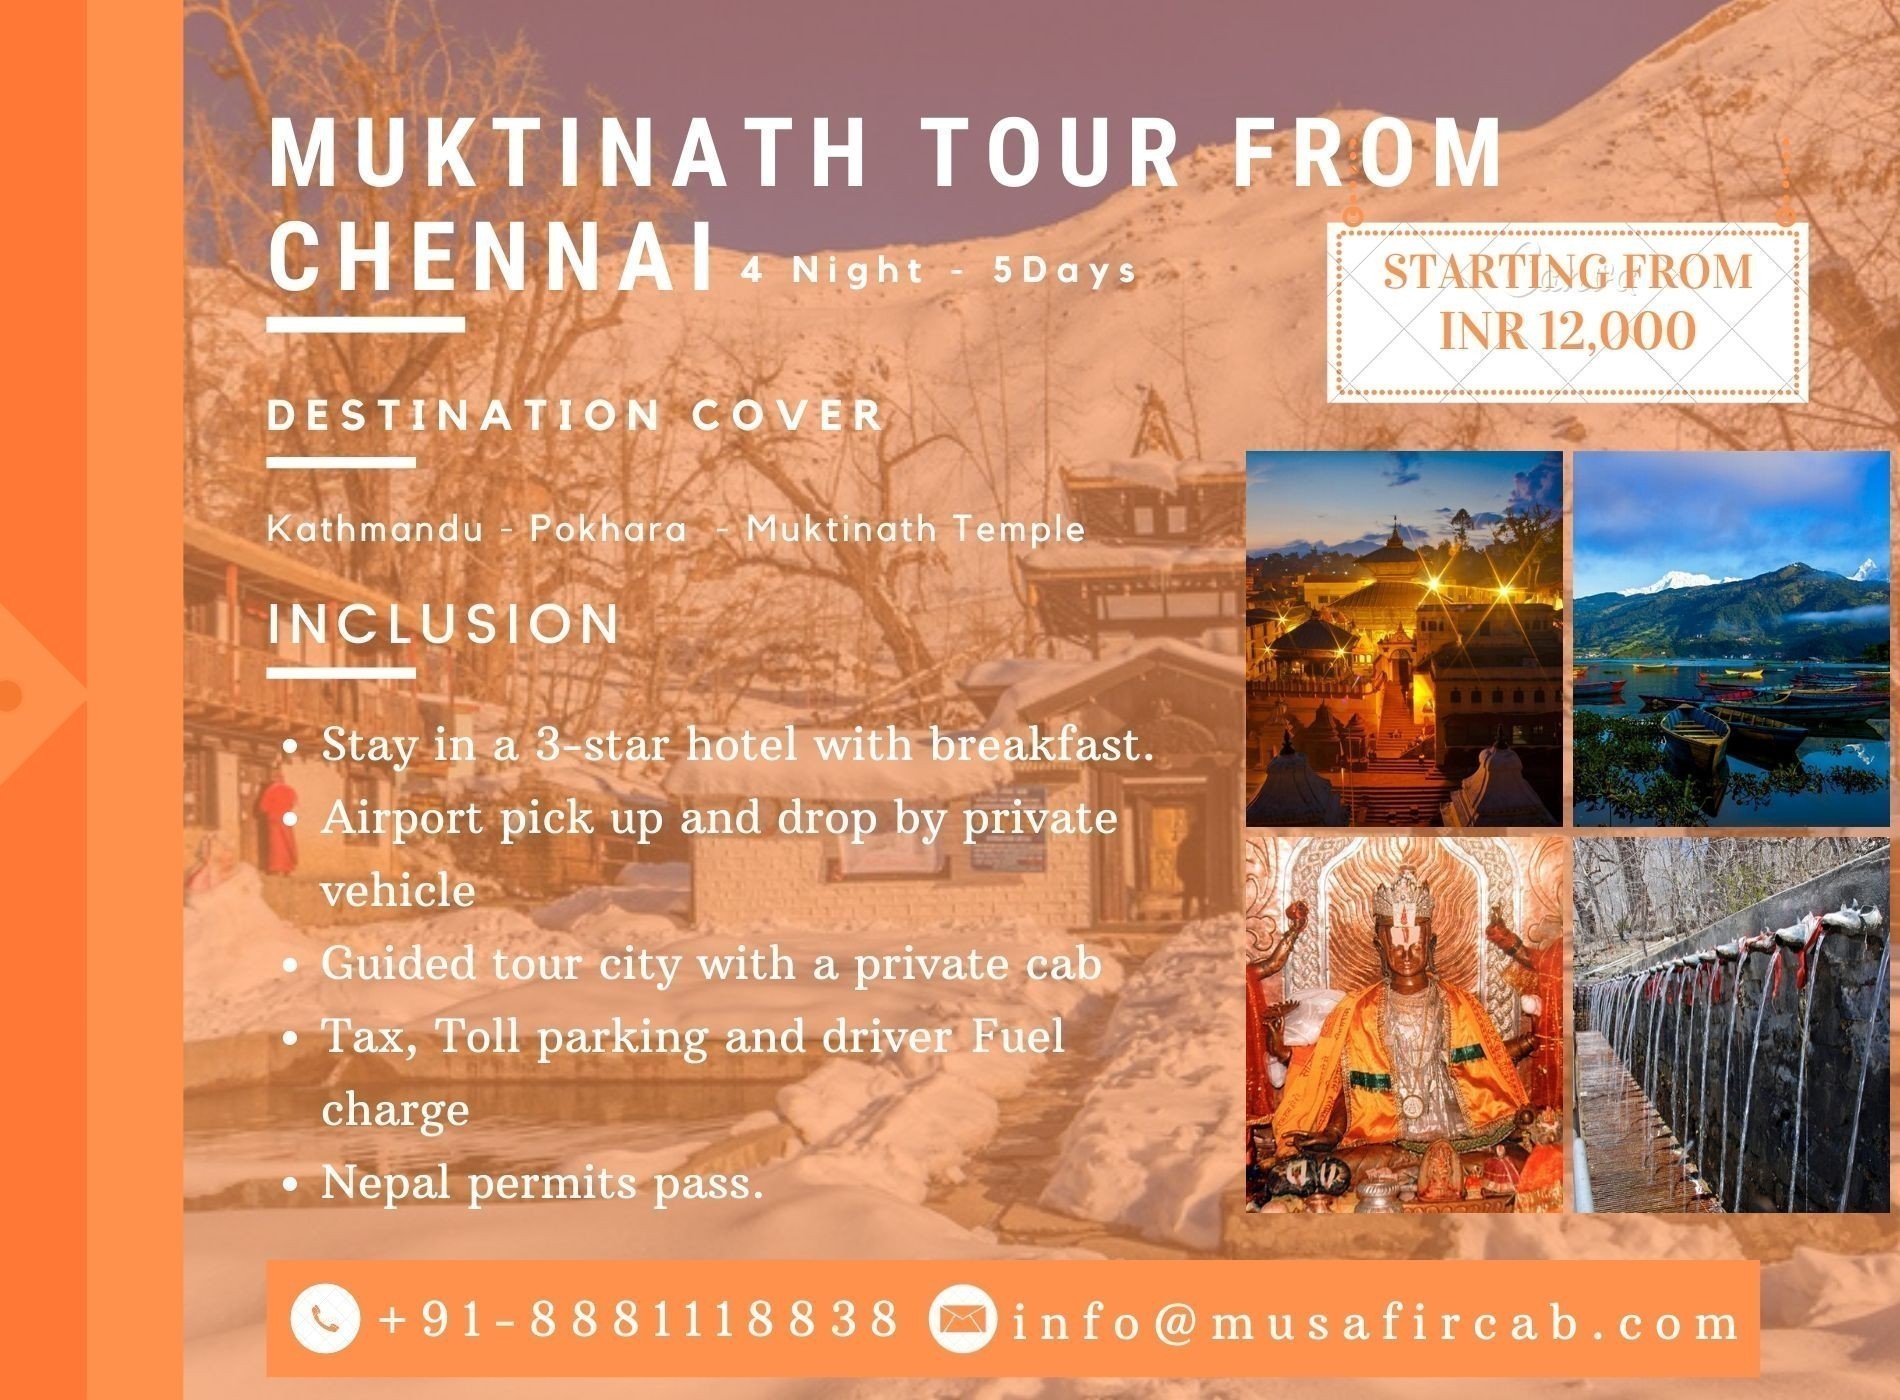 Muktinath Tour from Chennai